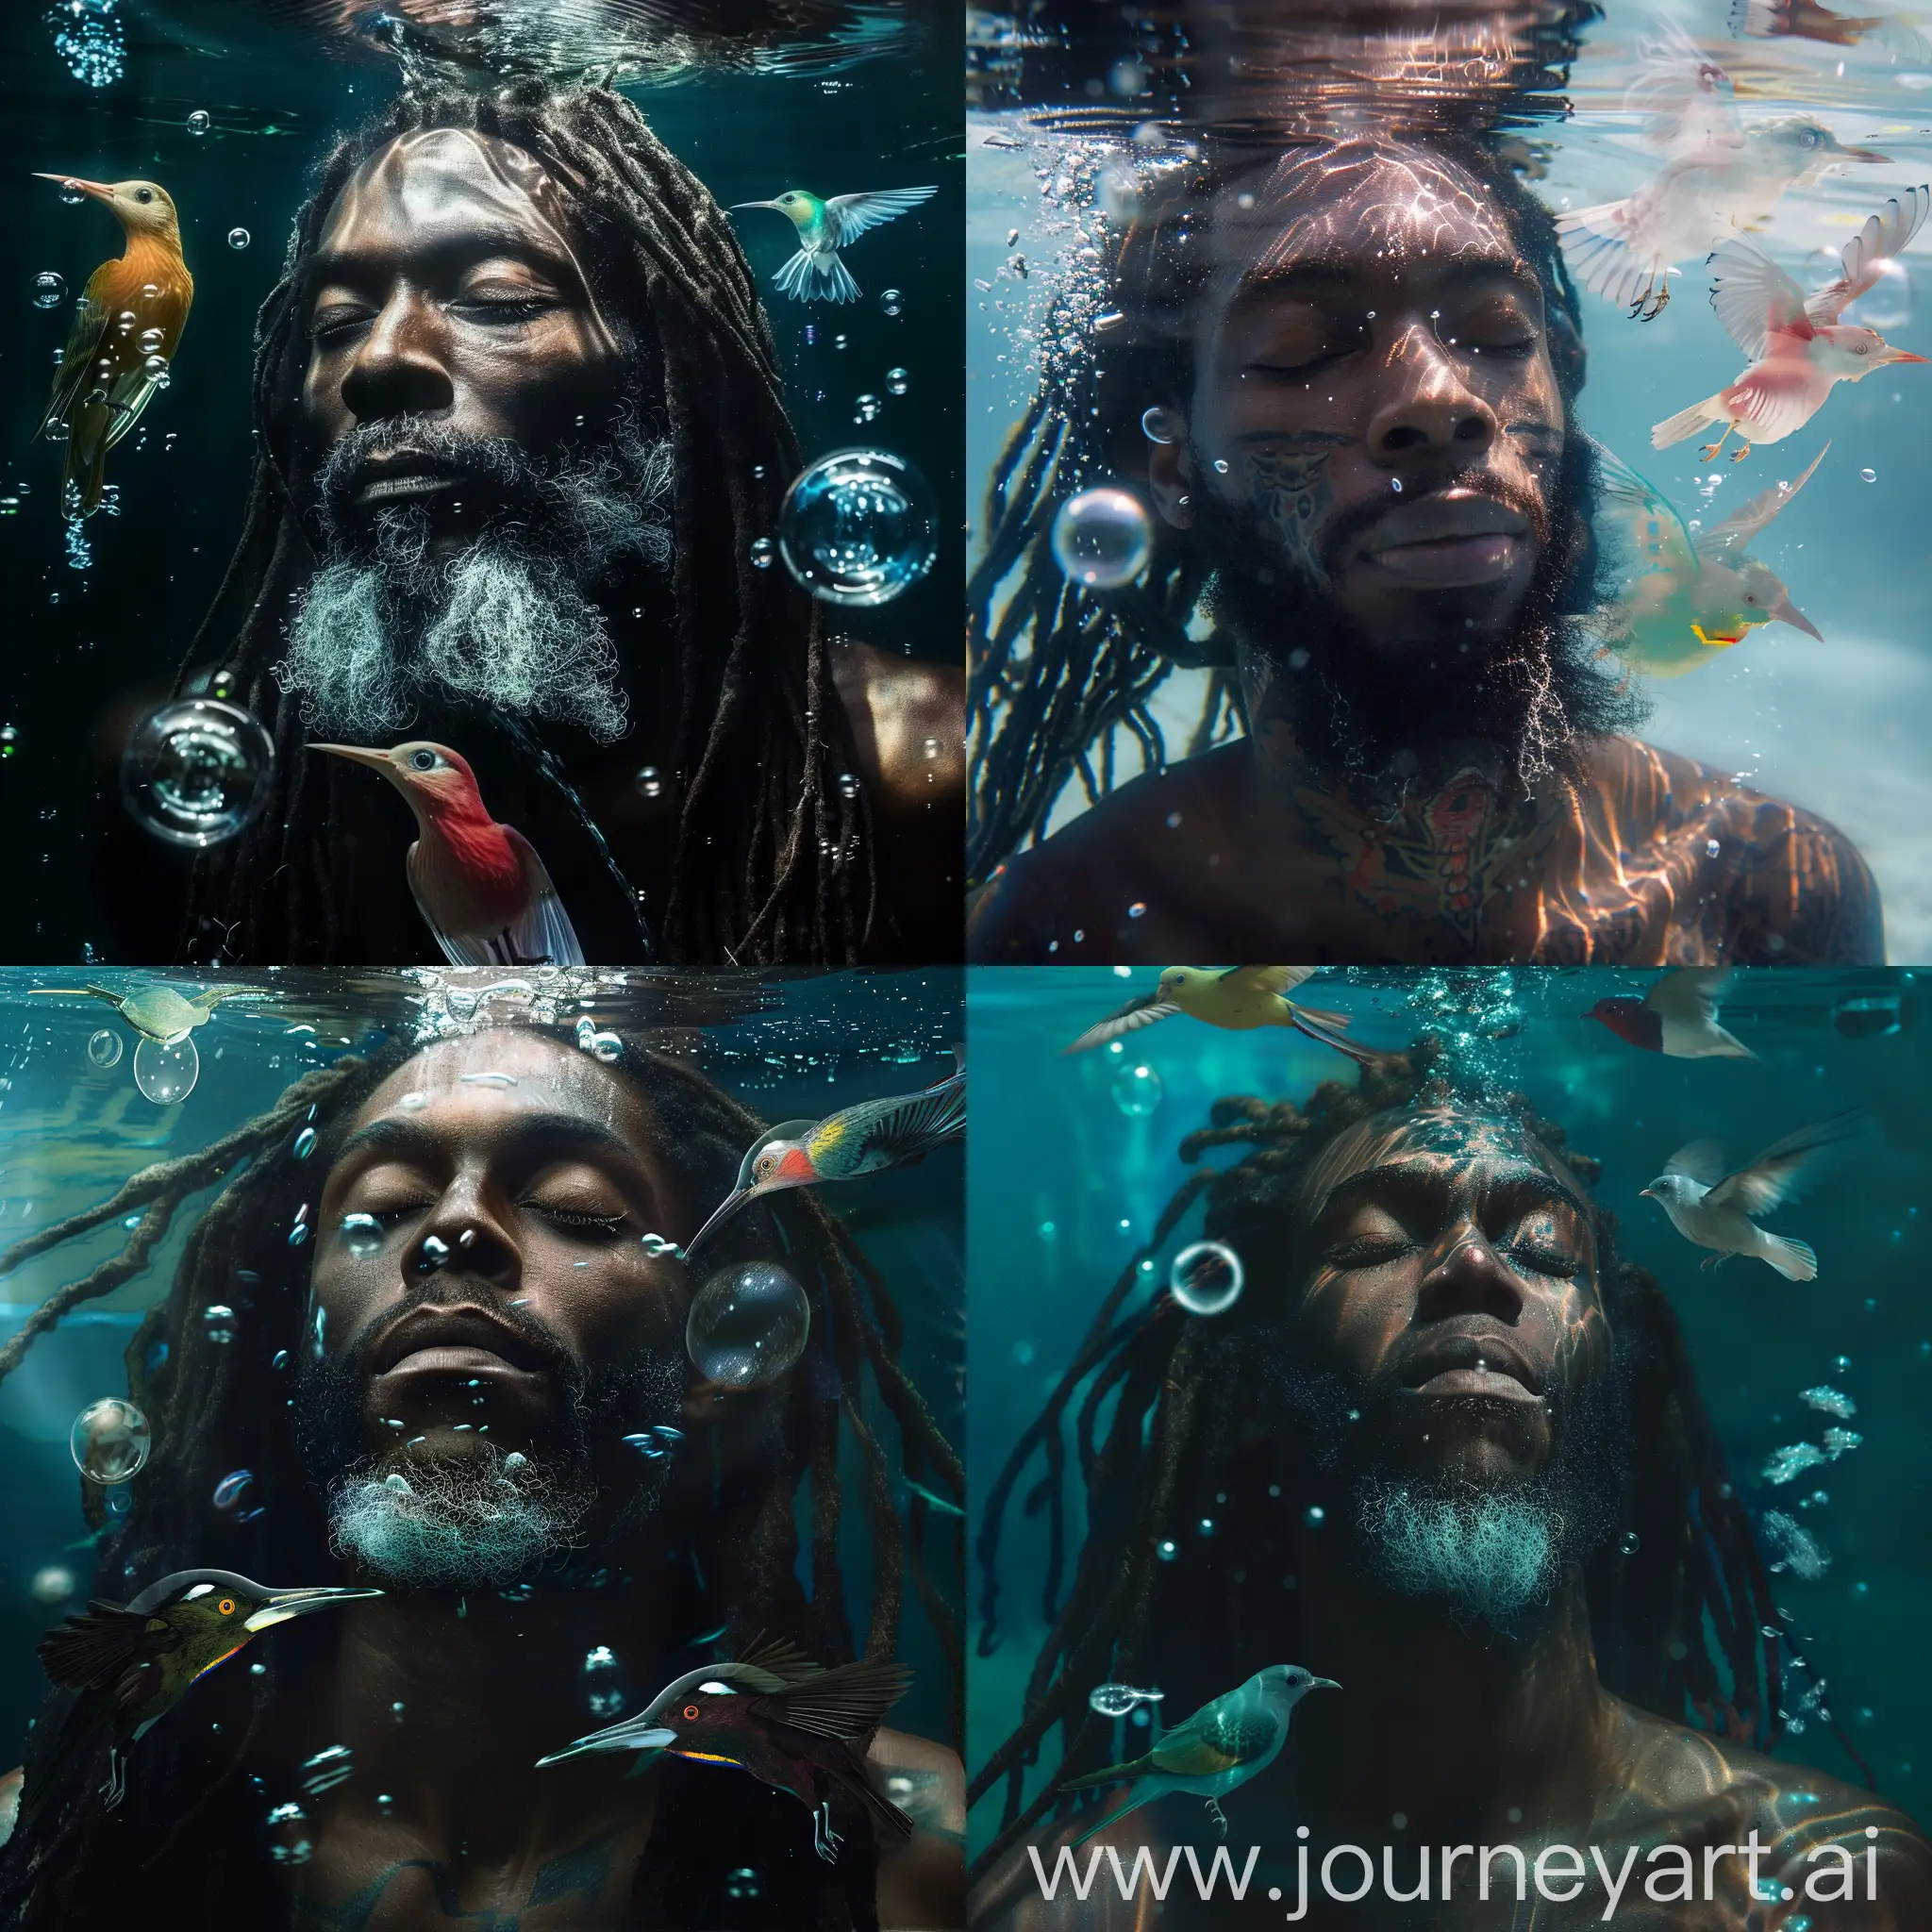 Underwater-Meditation-Serene-Black-Man-with-Dreadlocks-and-Transparent-Birds